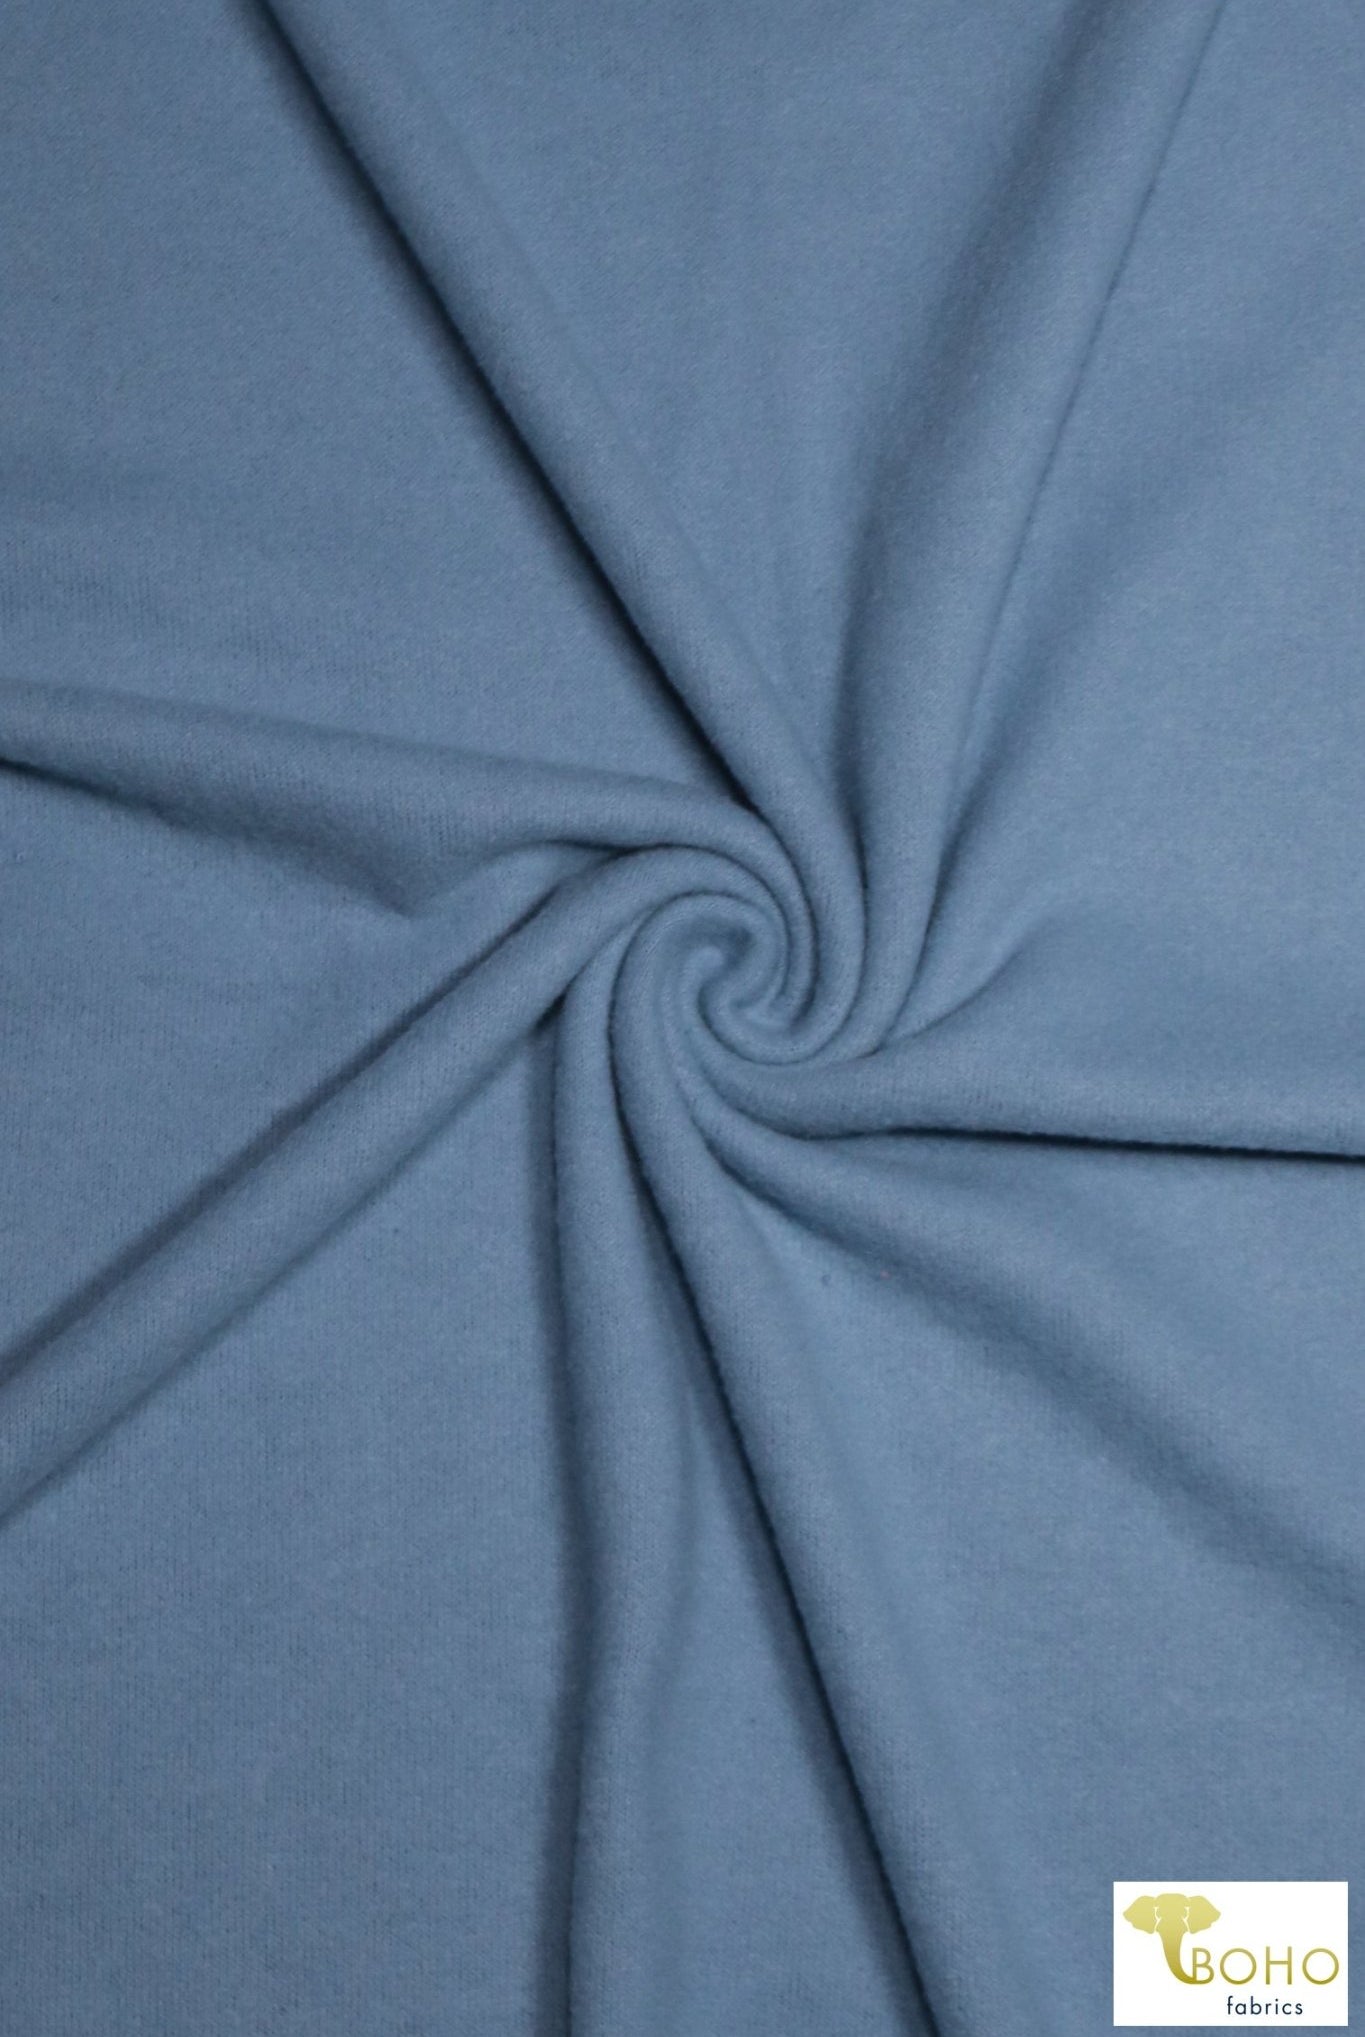 Last Cuts! Dusk Blue. Brushed Sweater Knit. BSWTR-327 - Boho Fabrics